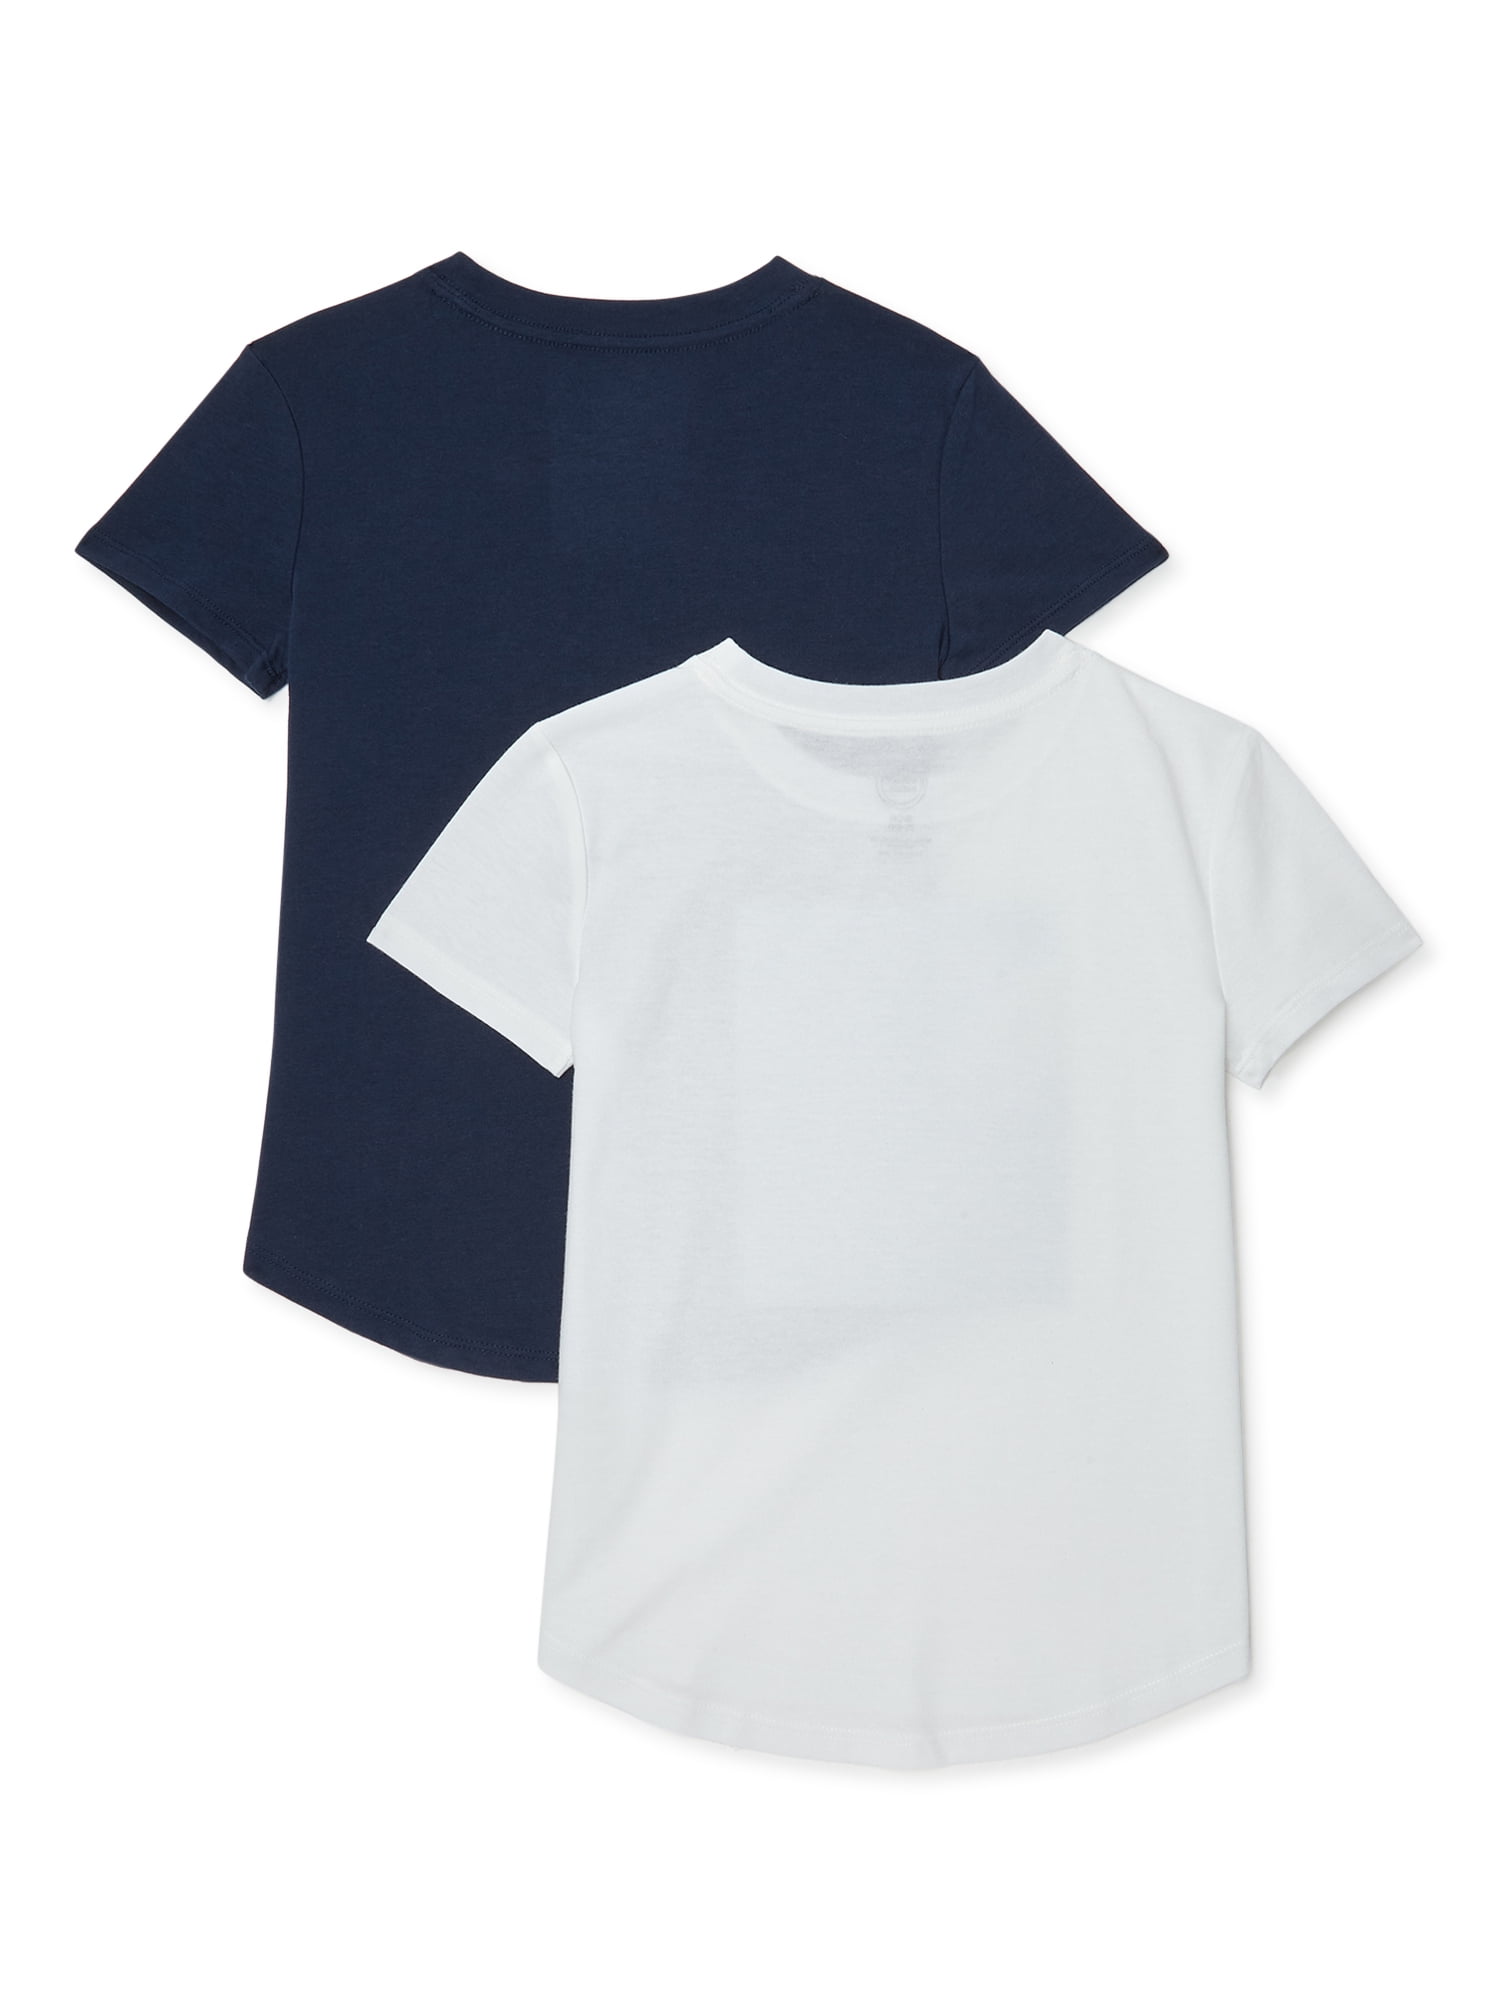 FIFTH&OCEAN San Francisco Giants Girls Sequins T-Shirt 22 / 6X